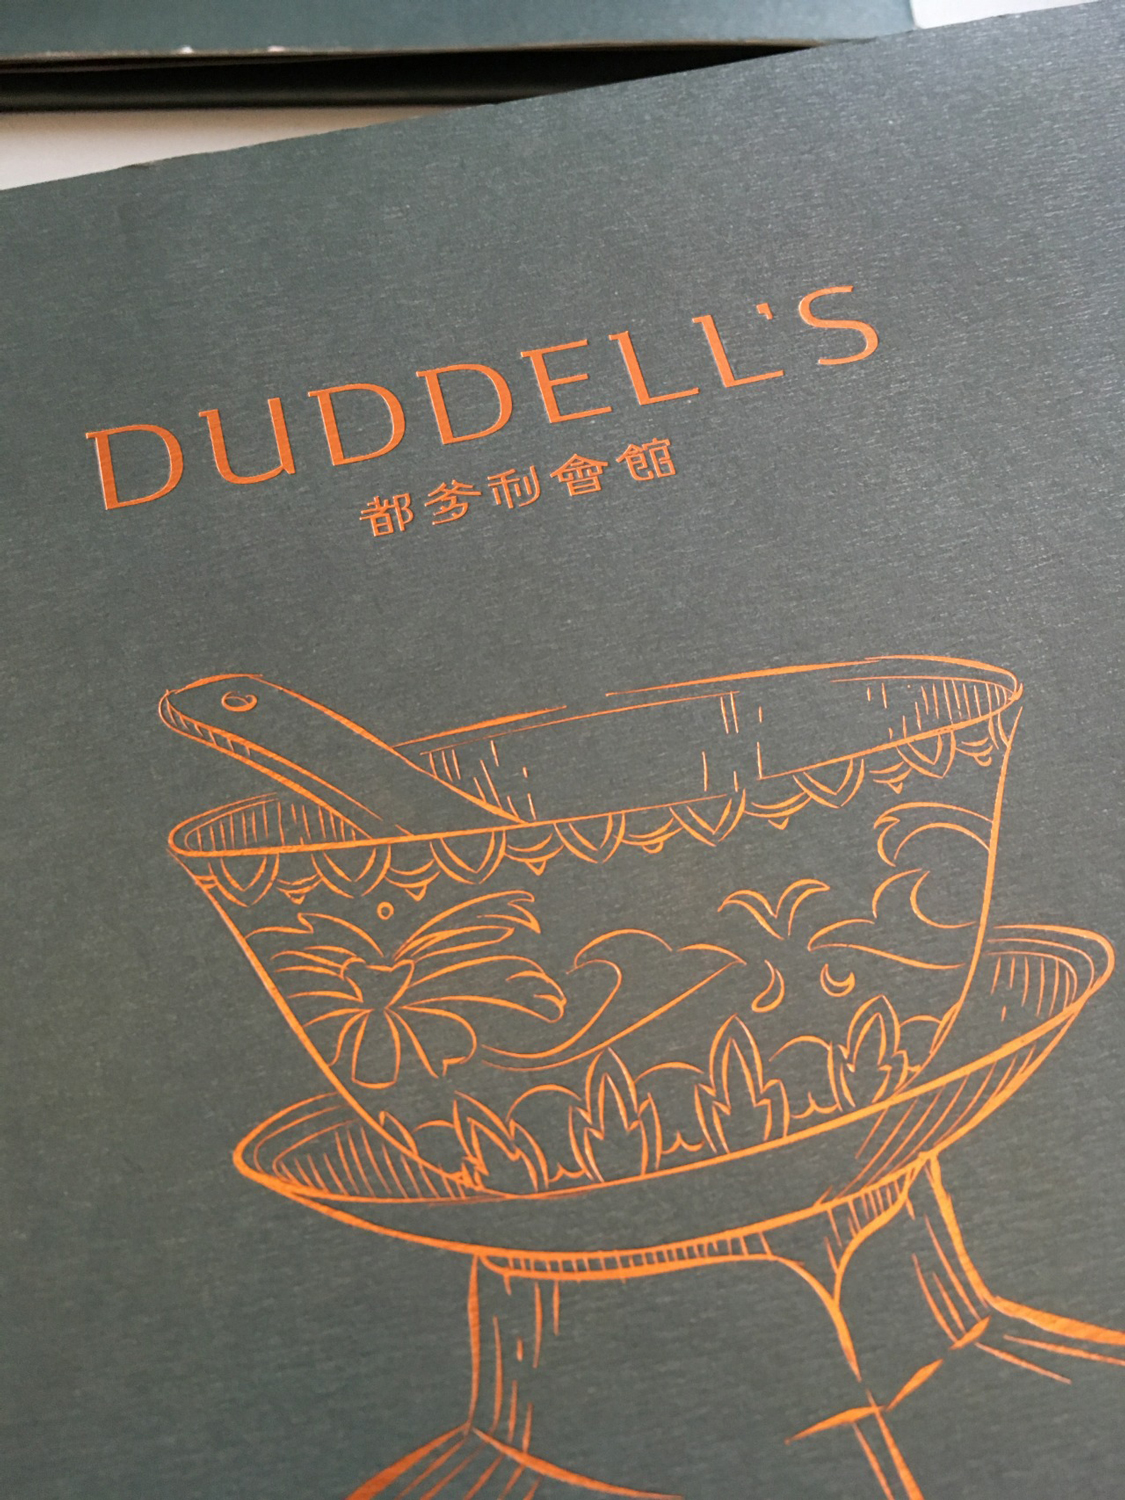 proyectos - proyectos de interior - restaurantes - duddell’s restaurant